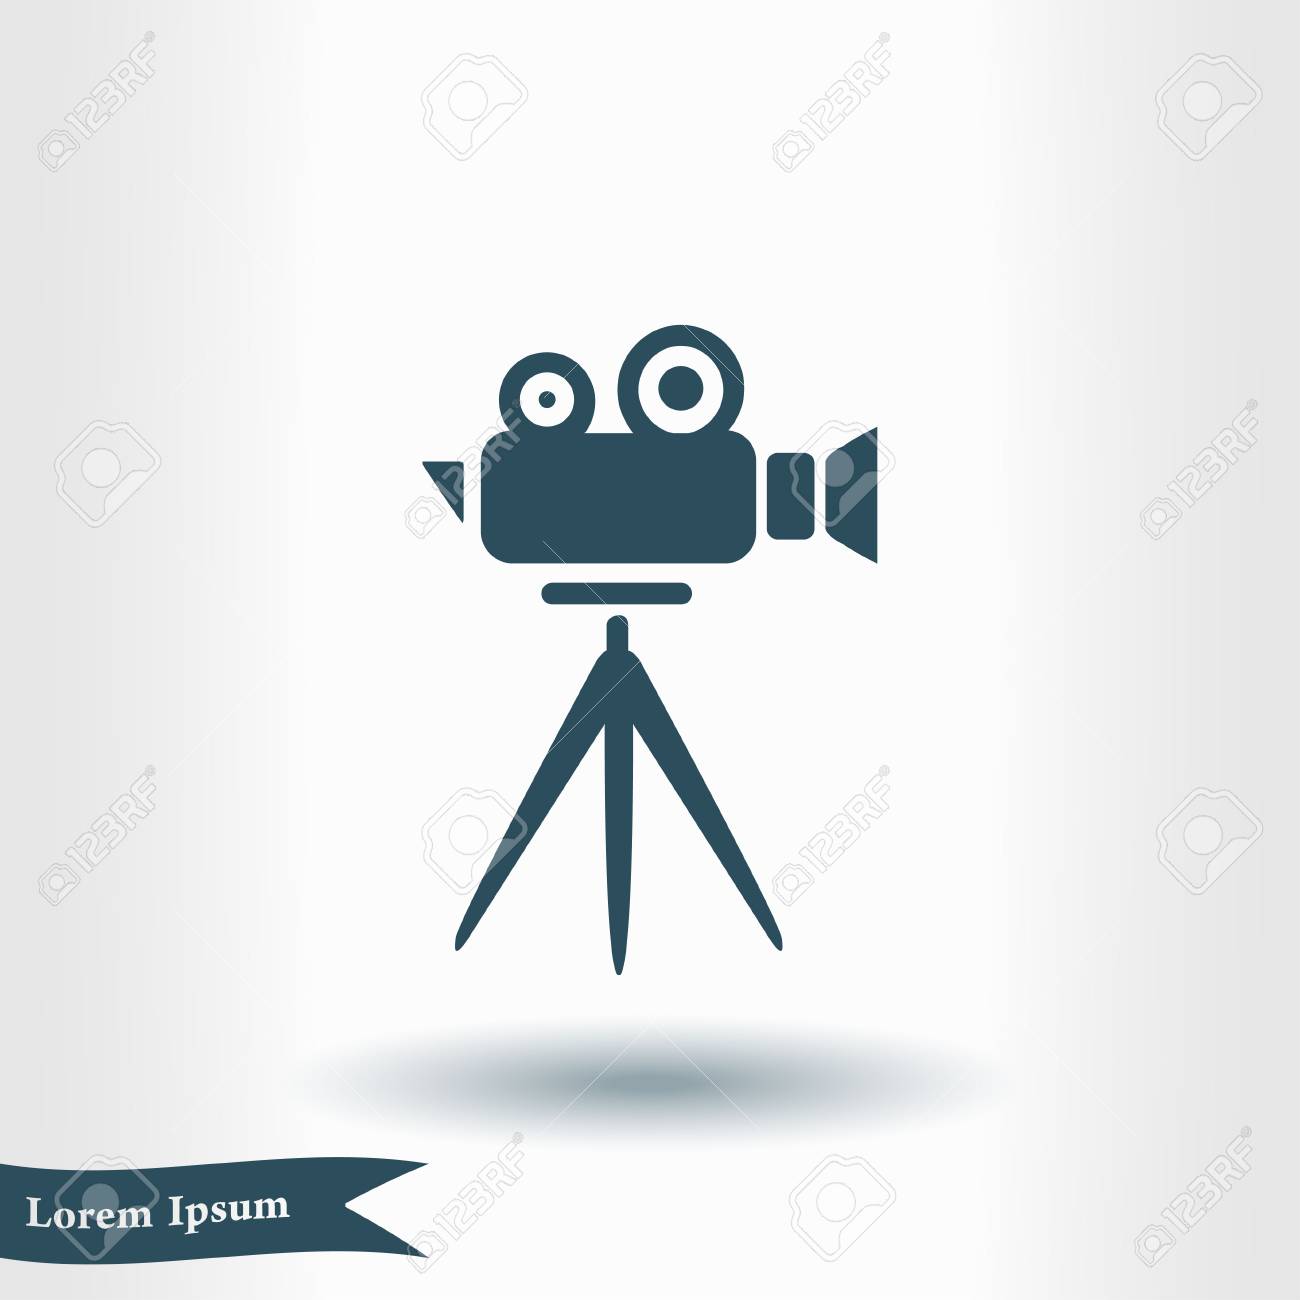 Cinema camera icon stock vector. Illustration of lens - 47556001